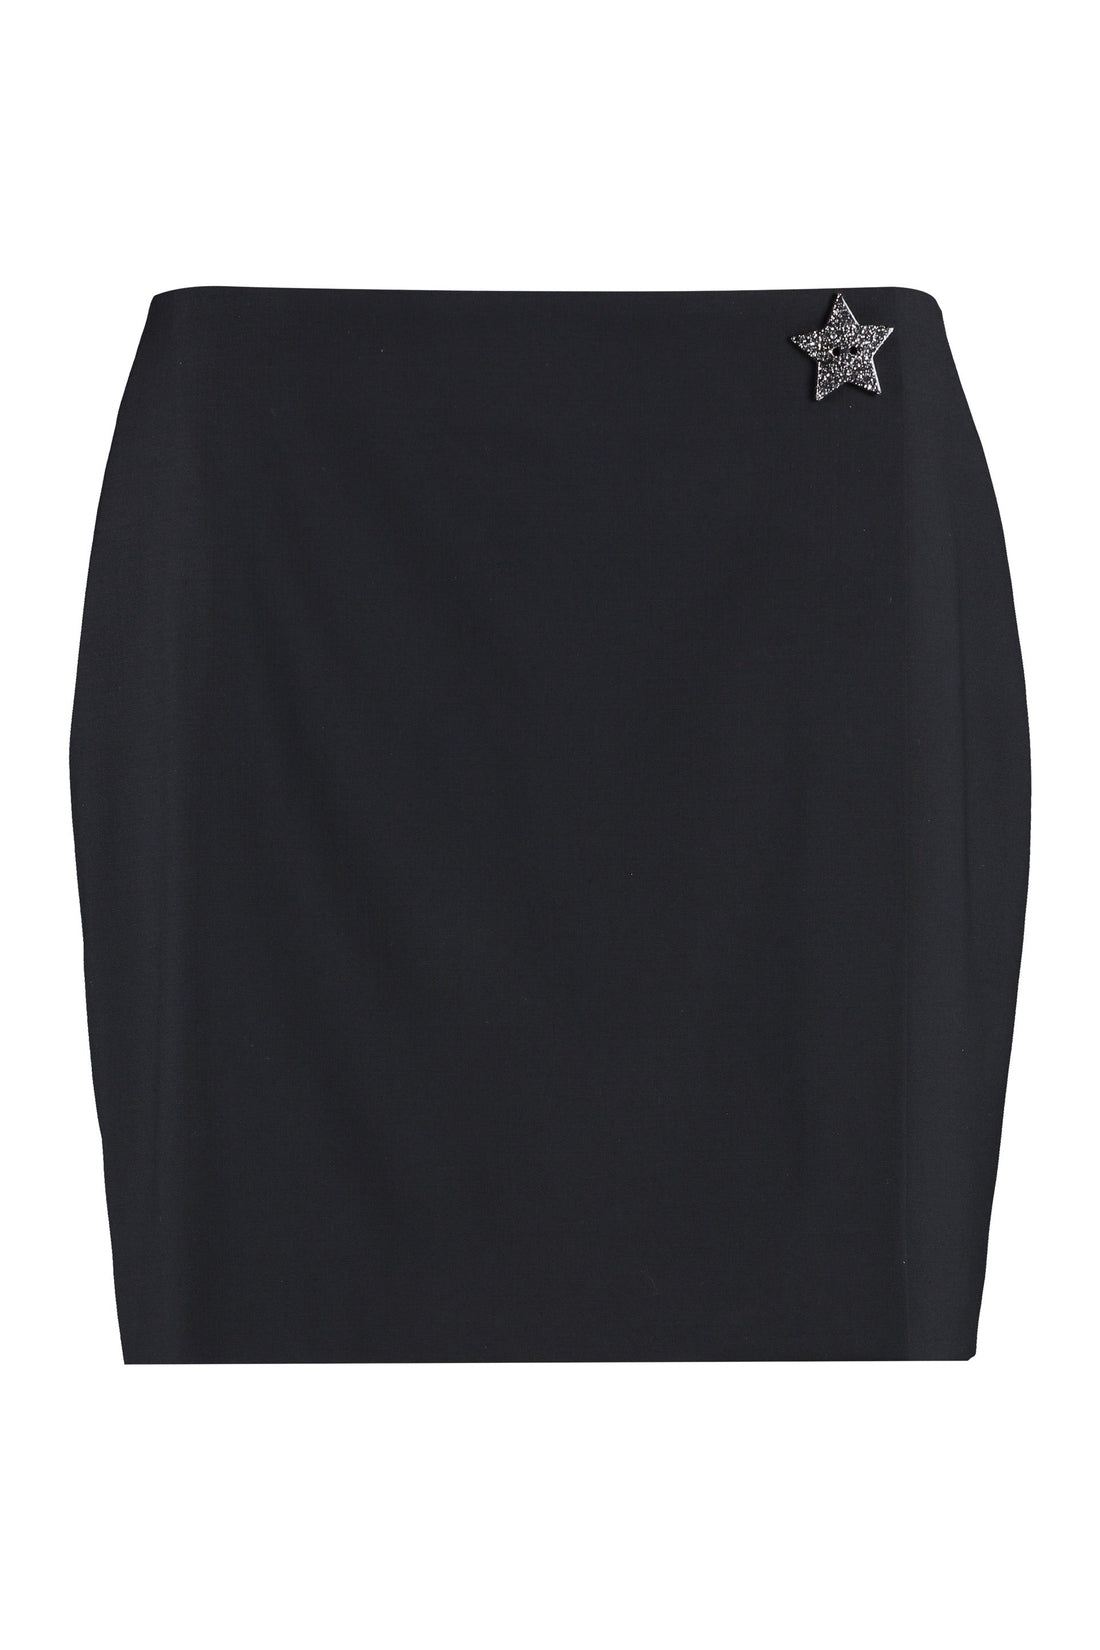 MSGM-OUTLET-SALE-Wool mini skirt-ARCHIVIST